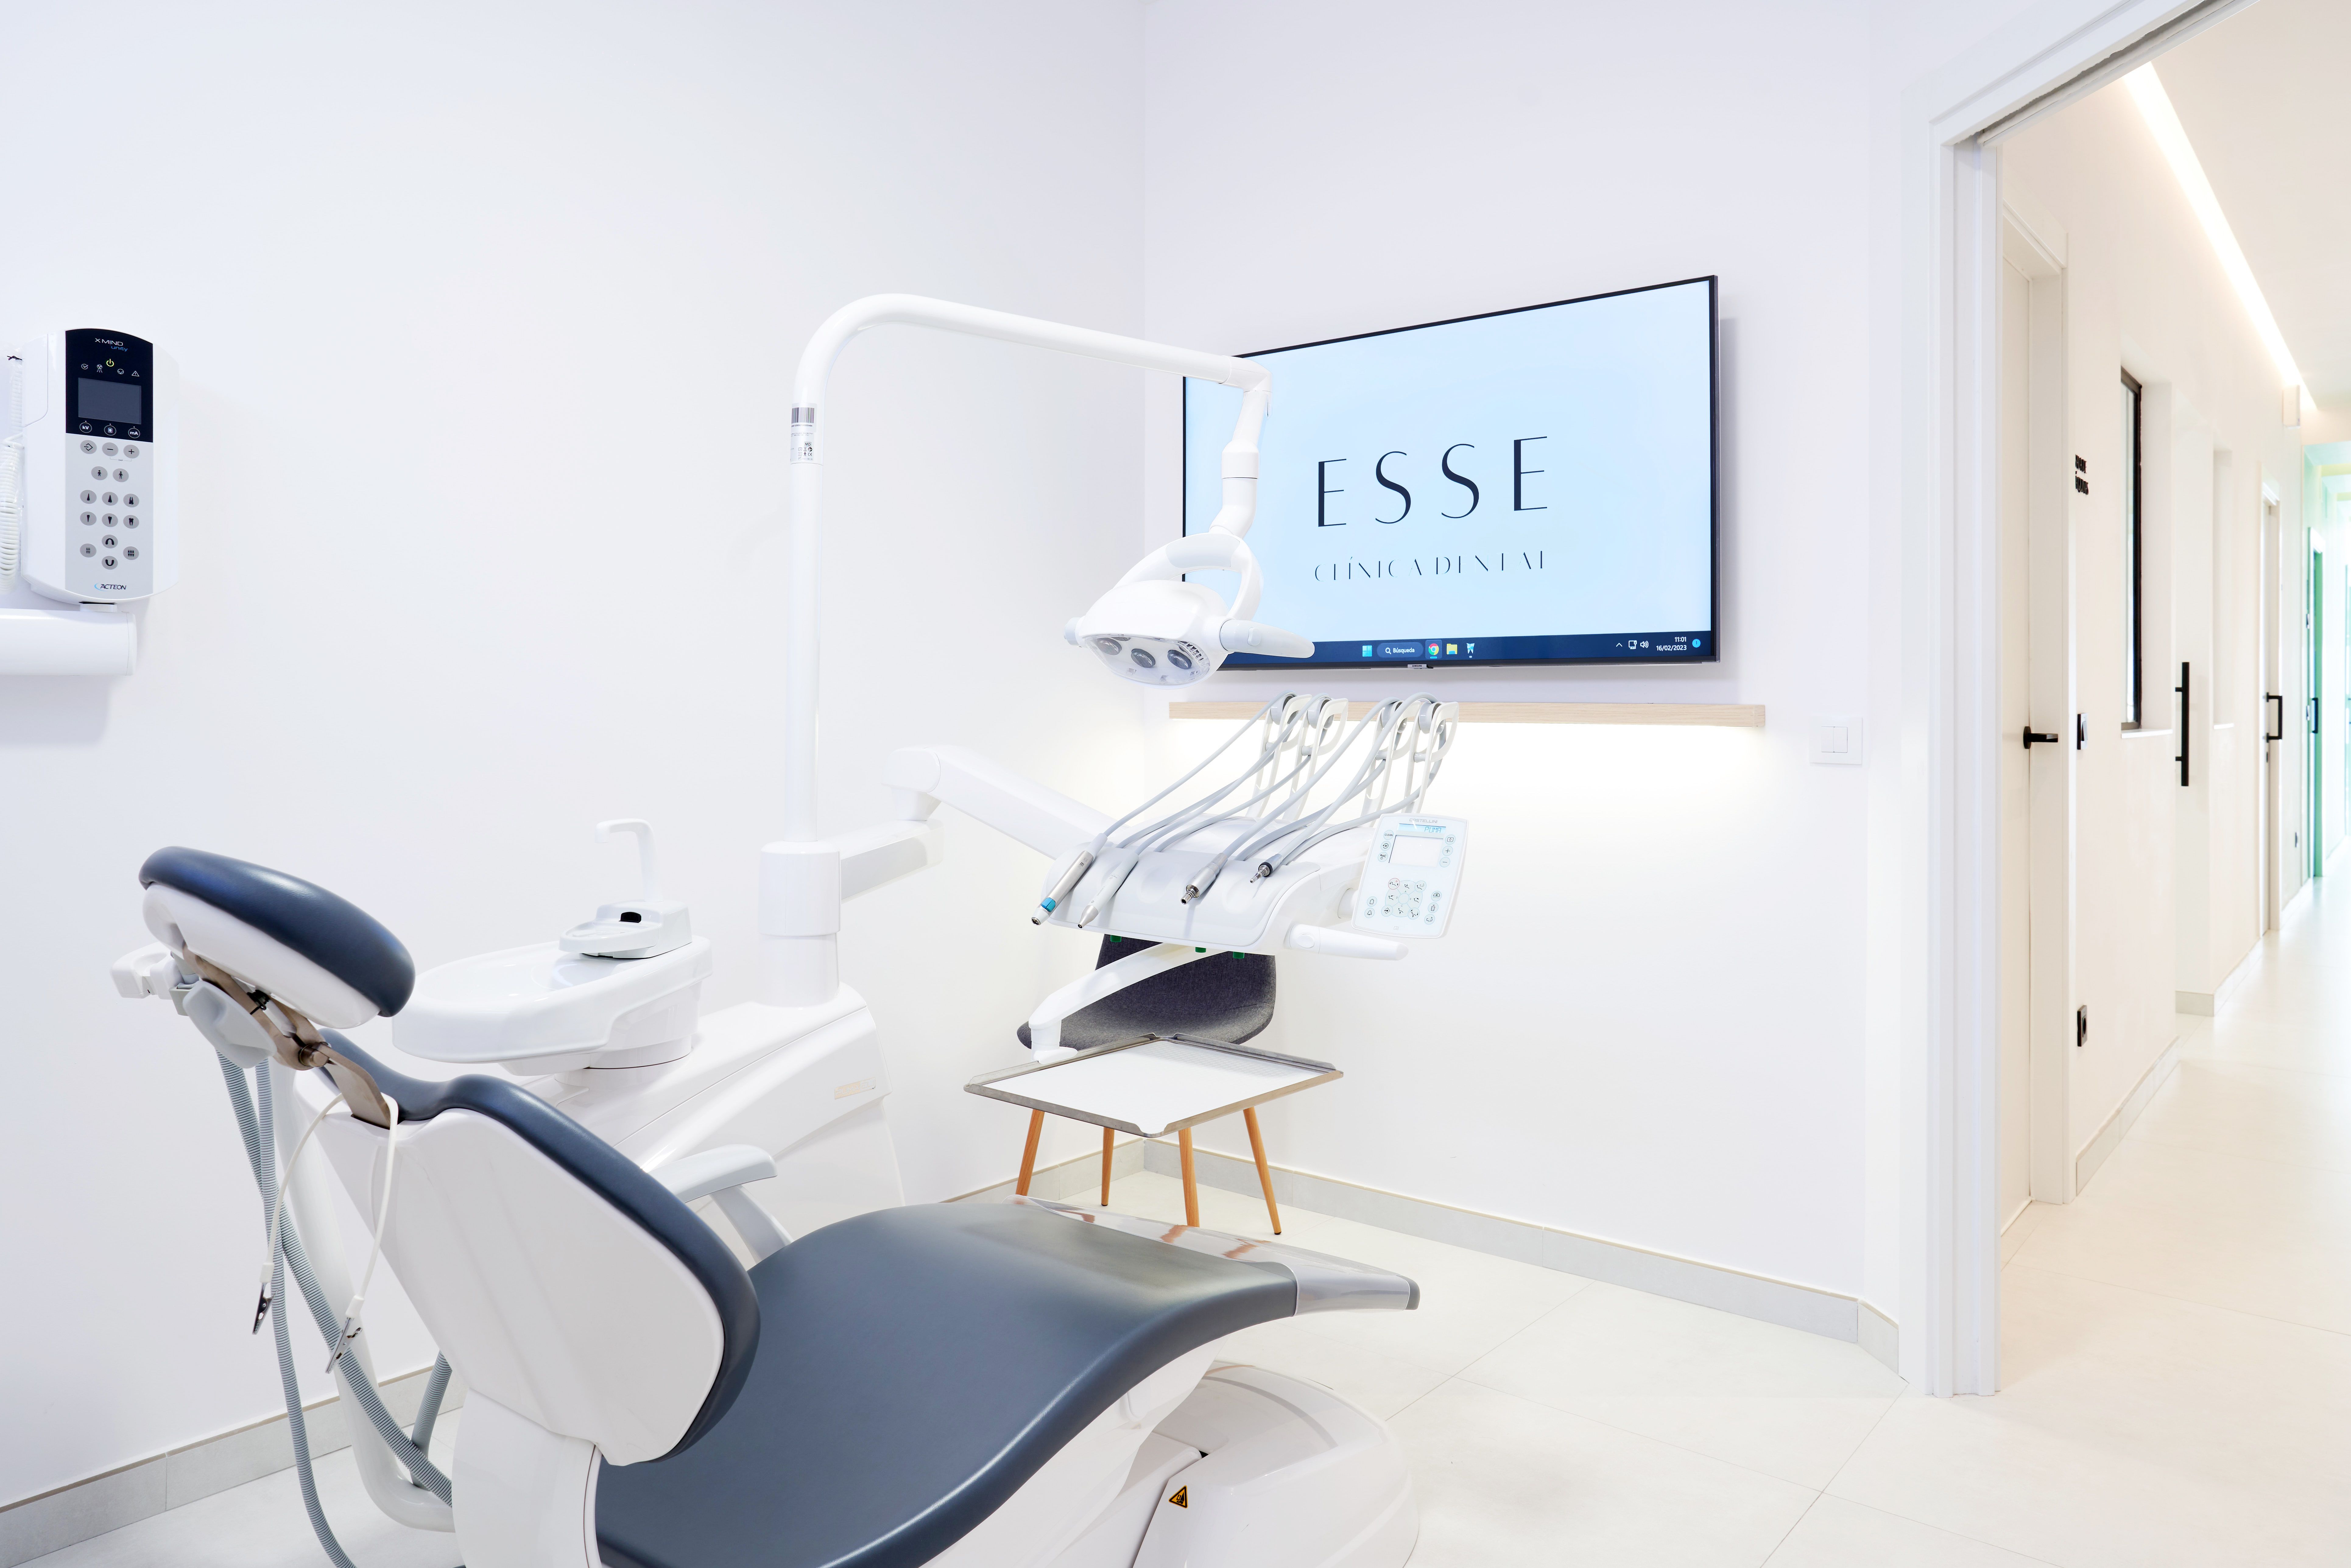 Clínica dental 'ESSE'